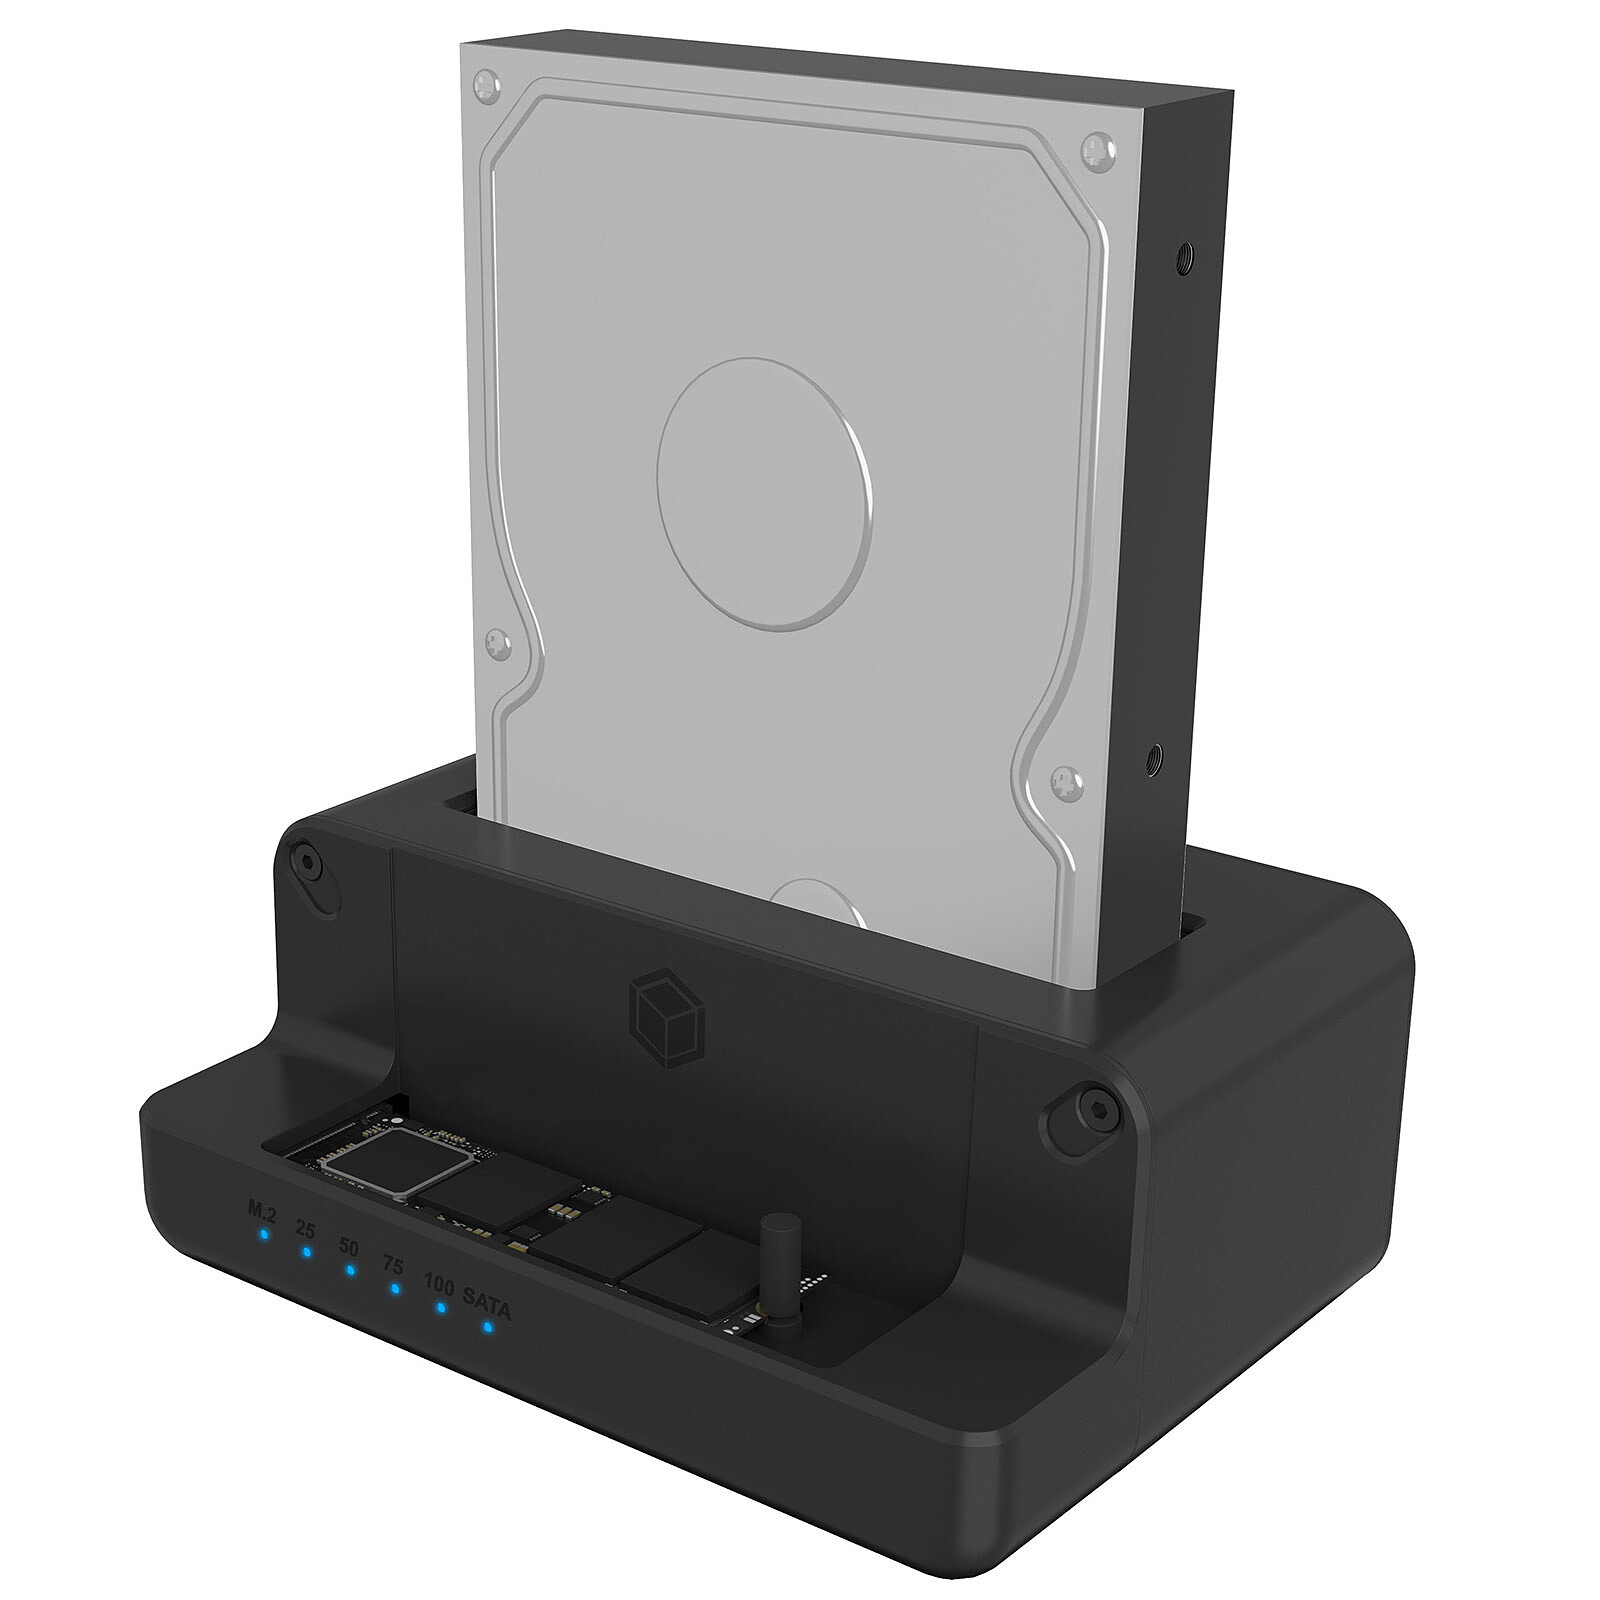 ICY BOX IB-550StU3S - Boîtier disque dur - Garantie 3 ans LDLC